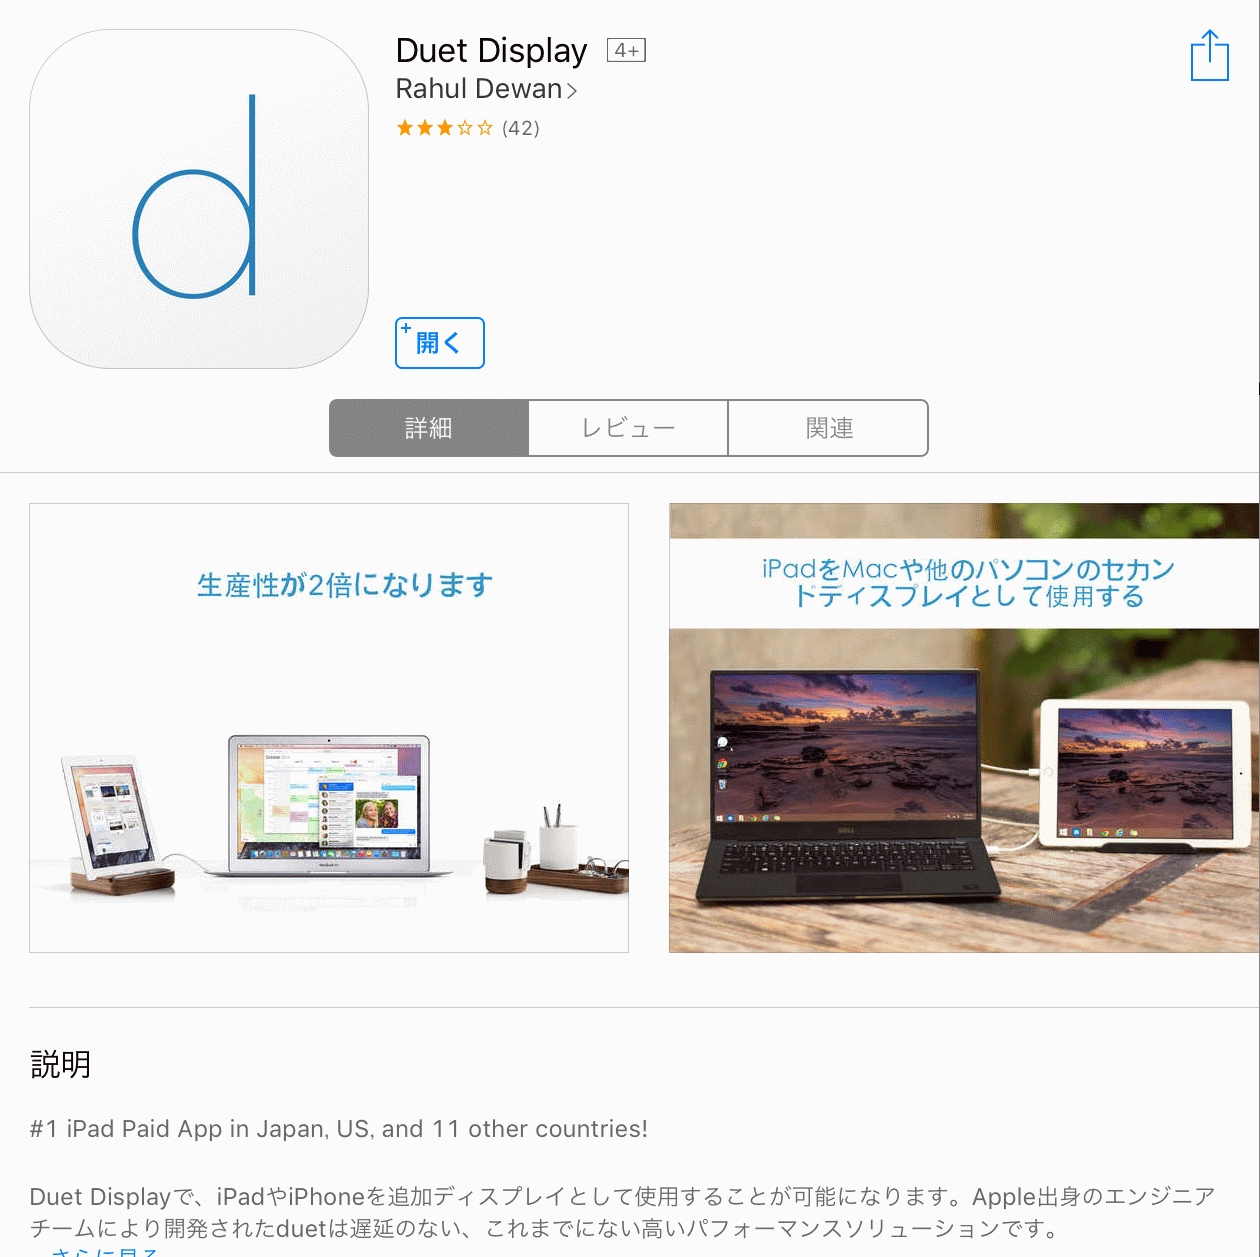 iOS用アプリ「Duet Display」は1,900円する